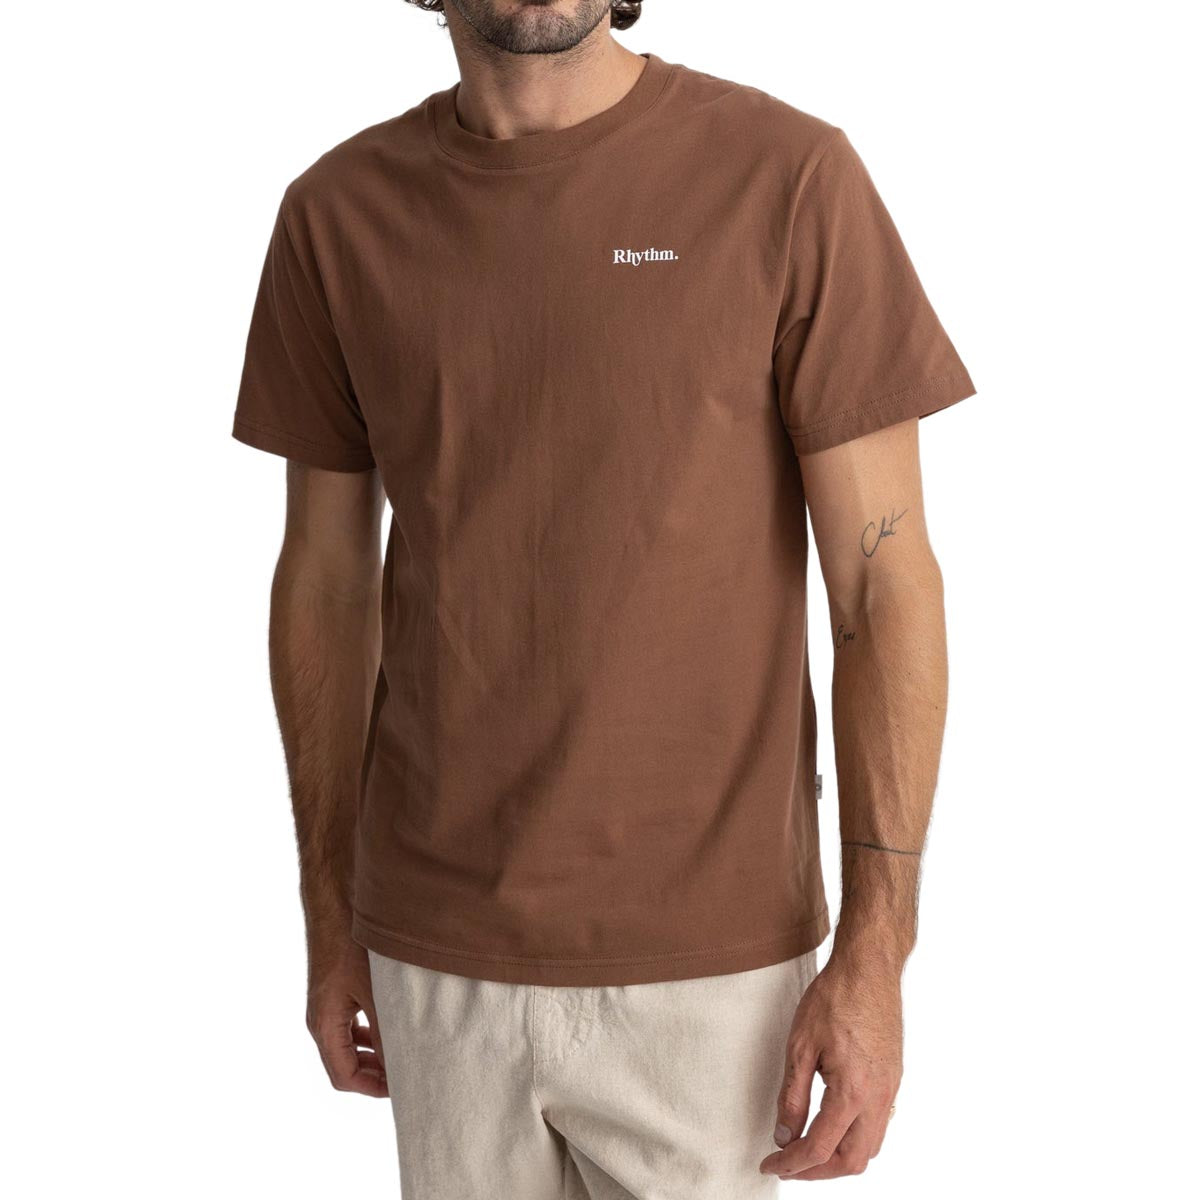 Rhythm Classic Brand T-Shirt - Chocolate image 2